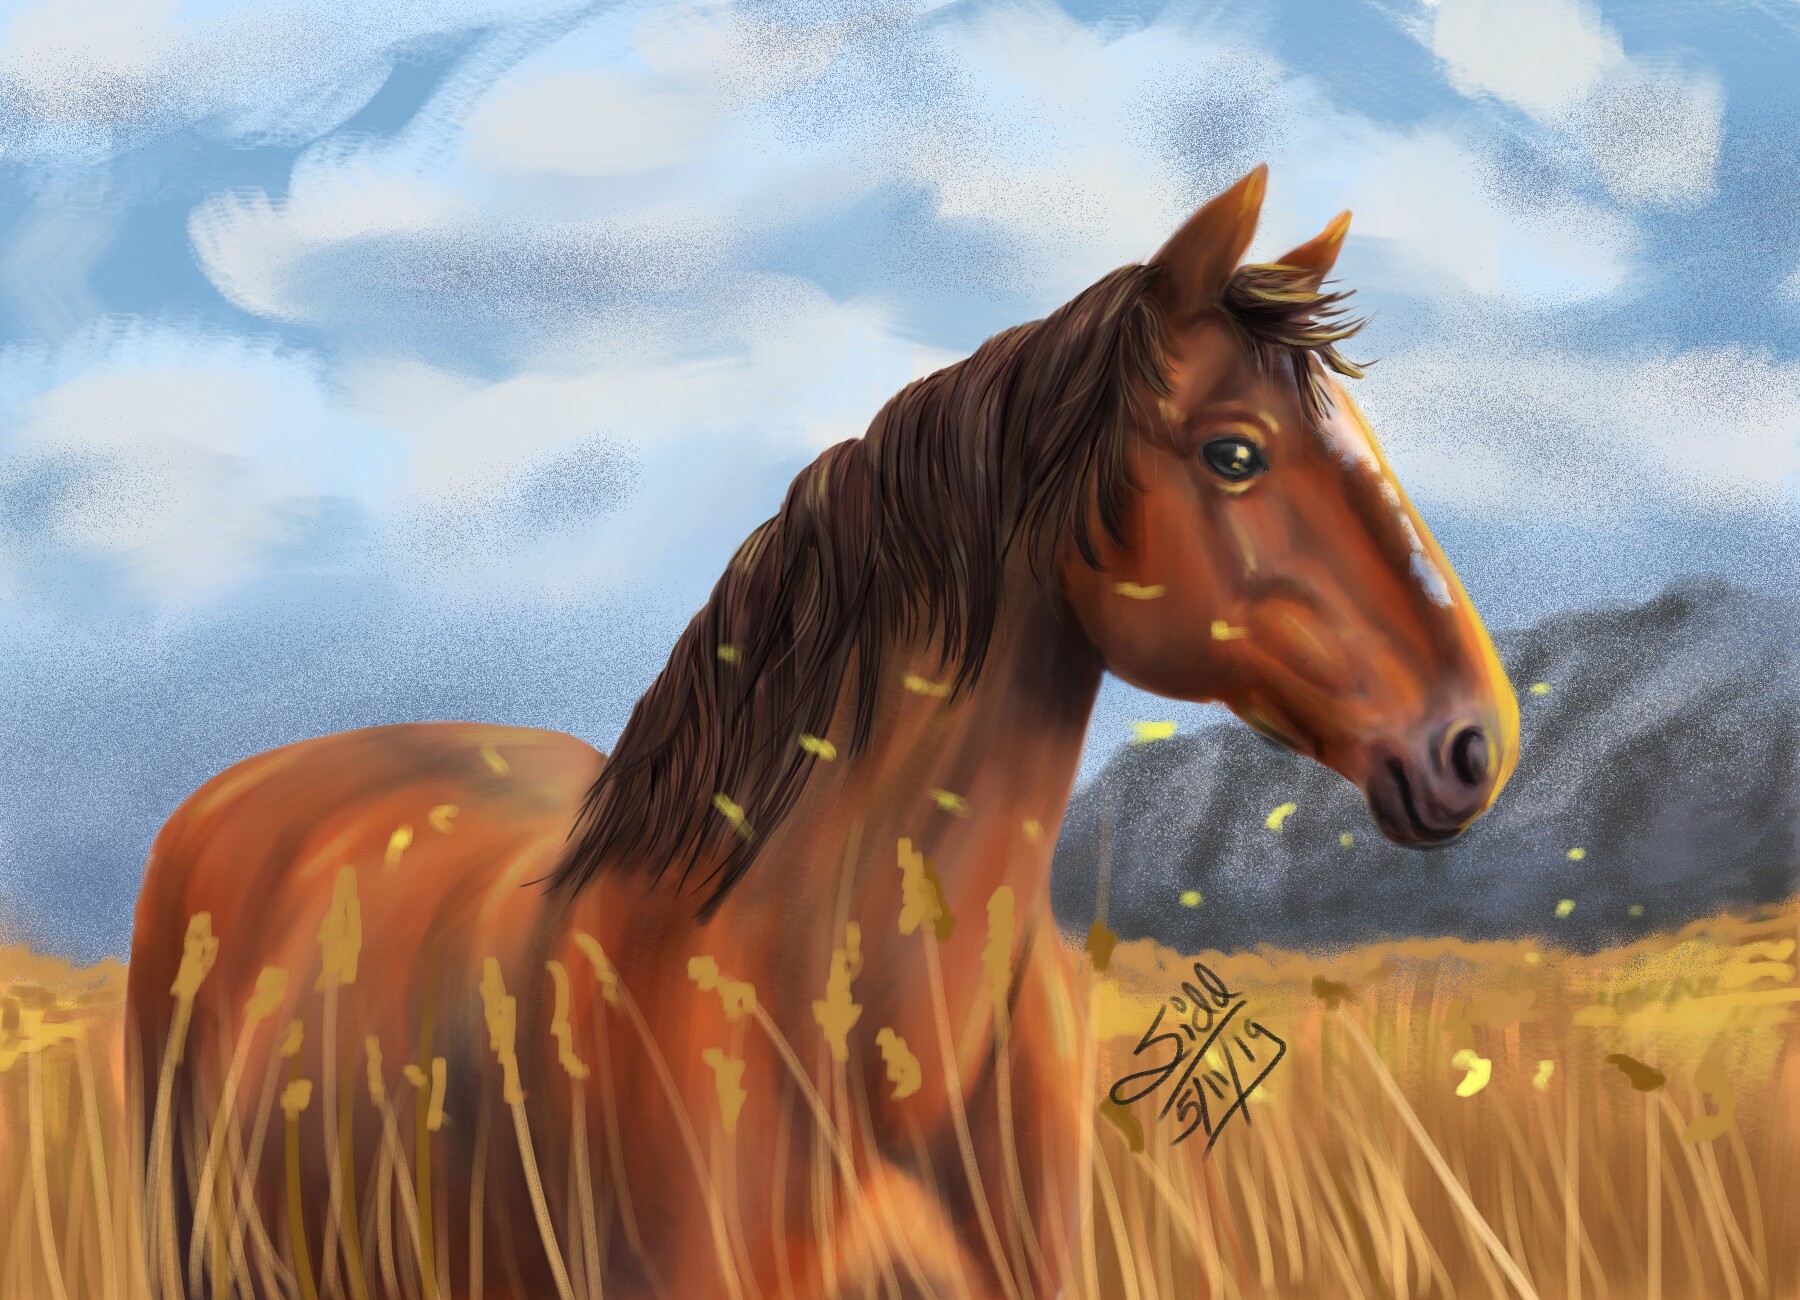 ArtStation - Horse Painting, Sidd T